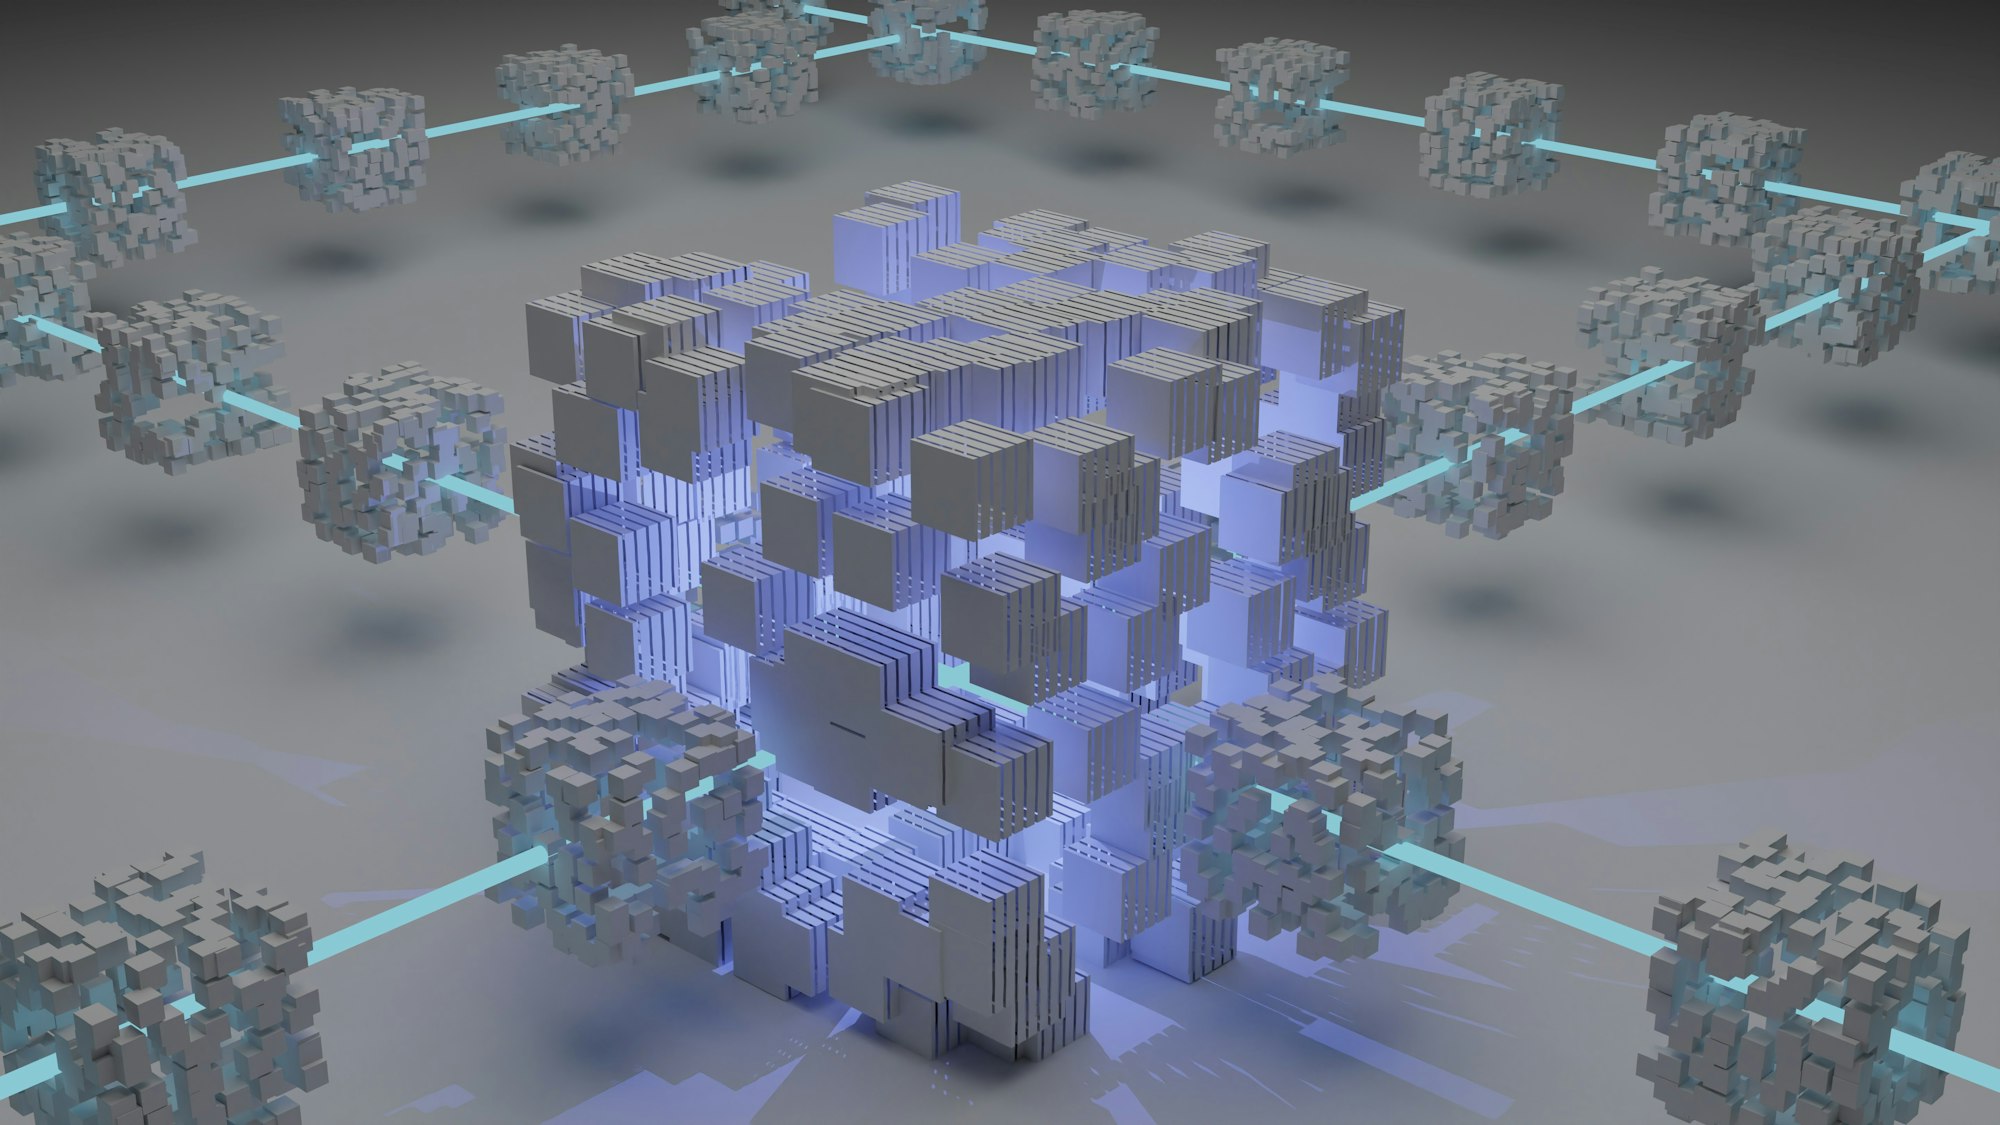 3D illustration of blocks in a blockchain.
「 LOGO / BRAND / 3D design 」 
WhatsApp: +917559305753
 Email: shubhamdhage000@gmail.com